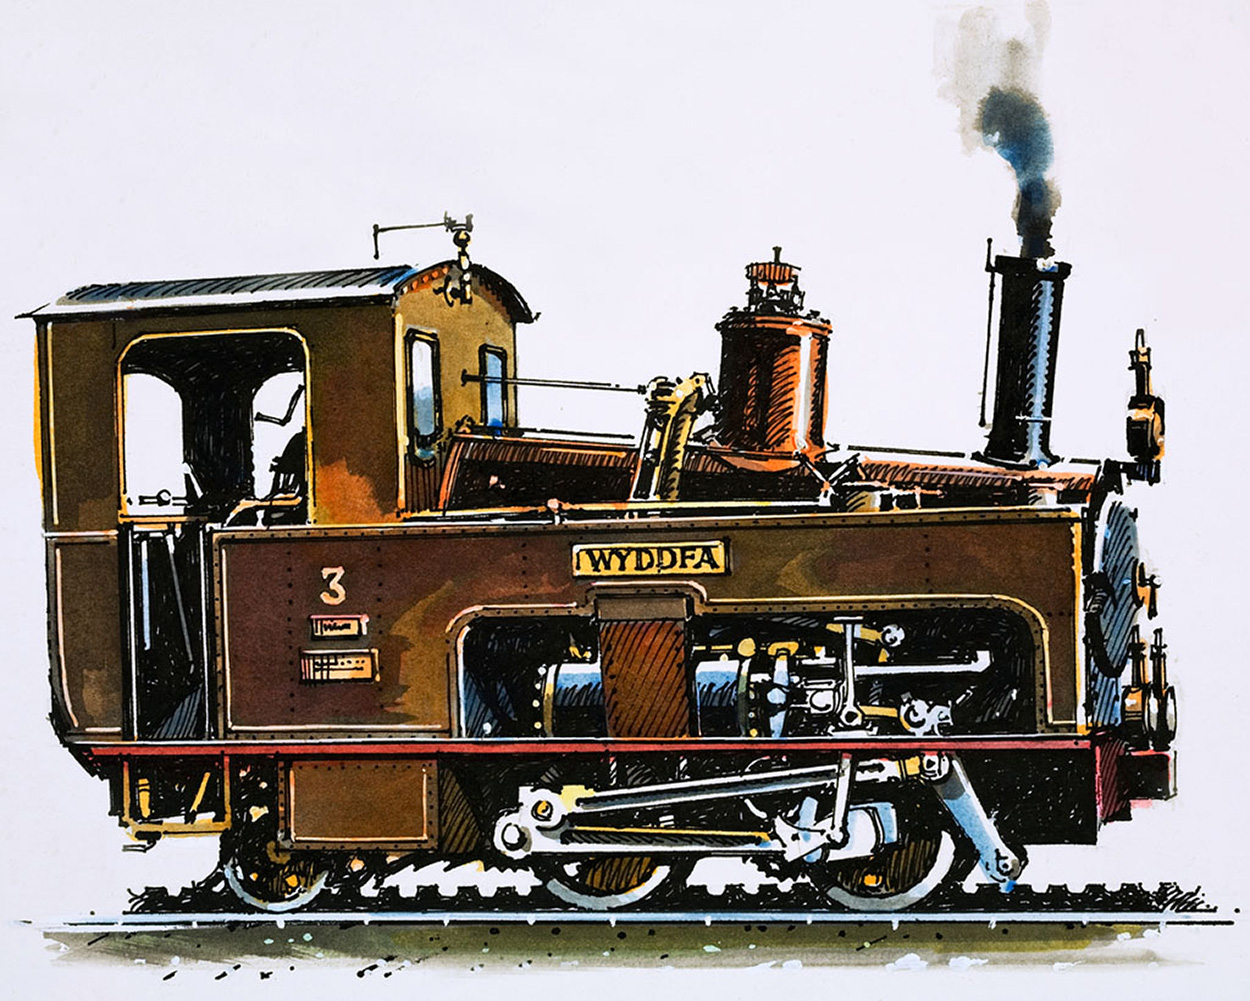 Locomotive of the Snowdon Mountain Railway (Original) art by John S Smith Art at The Illustration Art Gallery